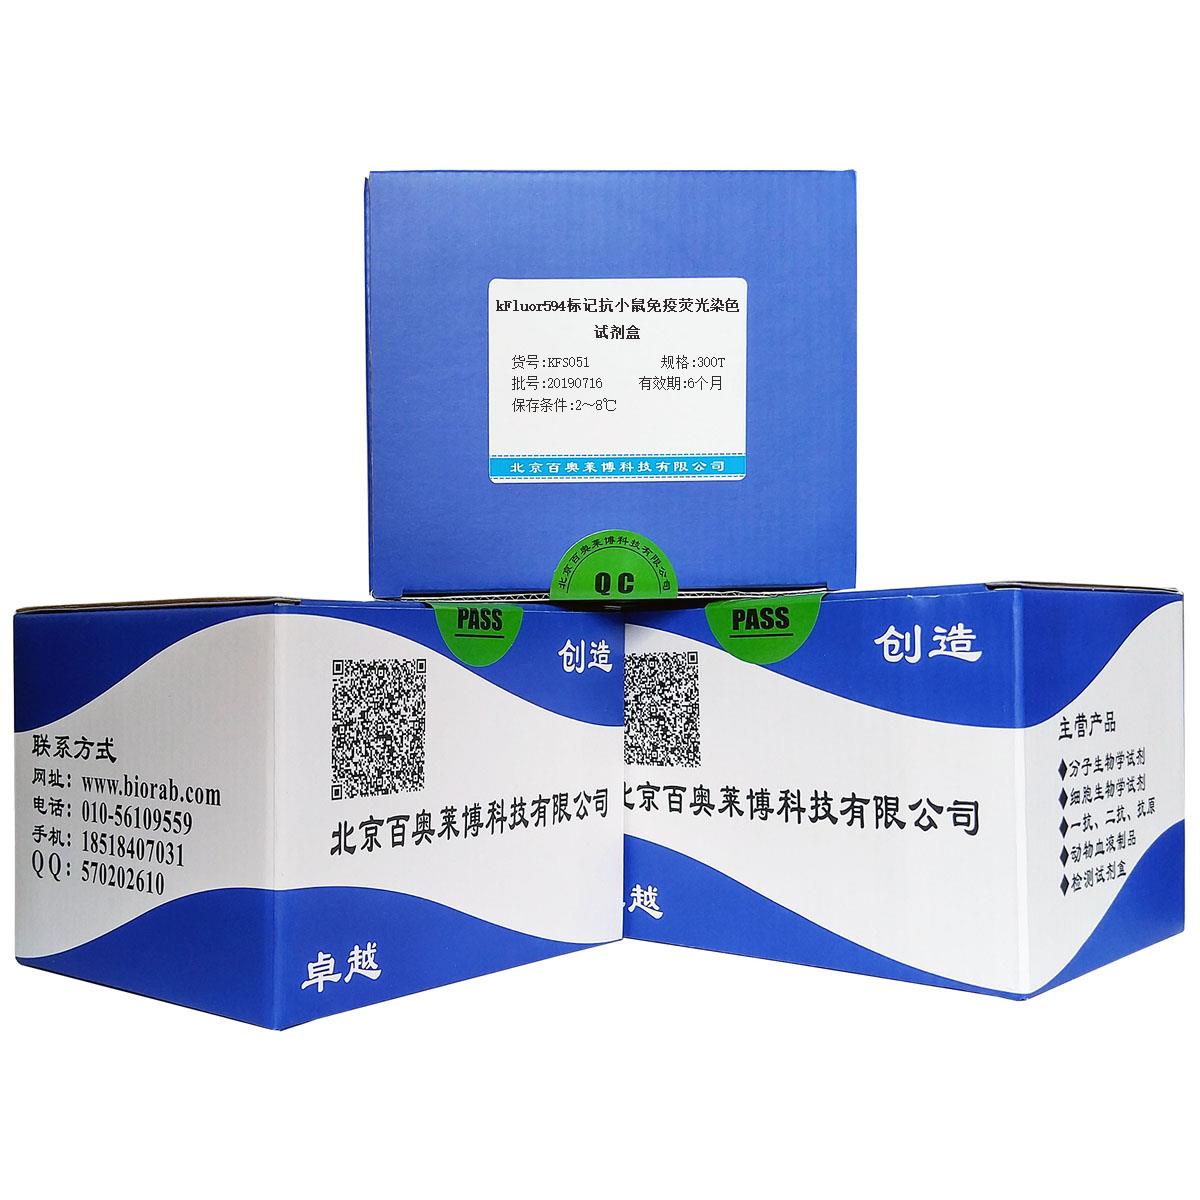 kFluor594标记抗小鼠免疫荧光染色试剂盒